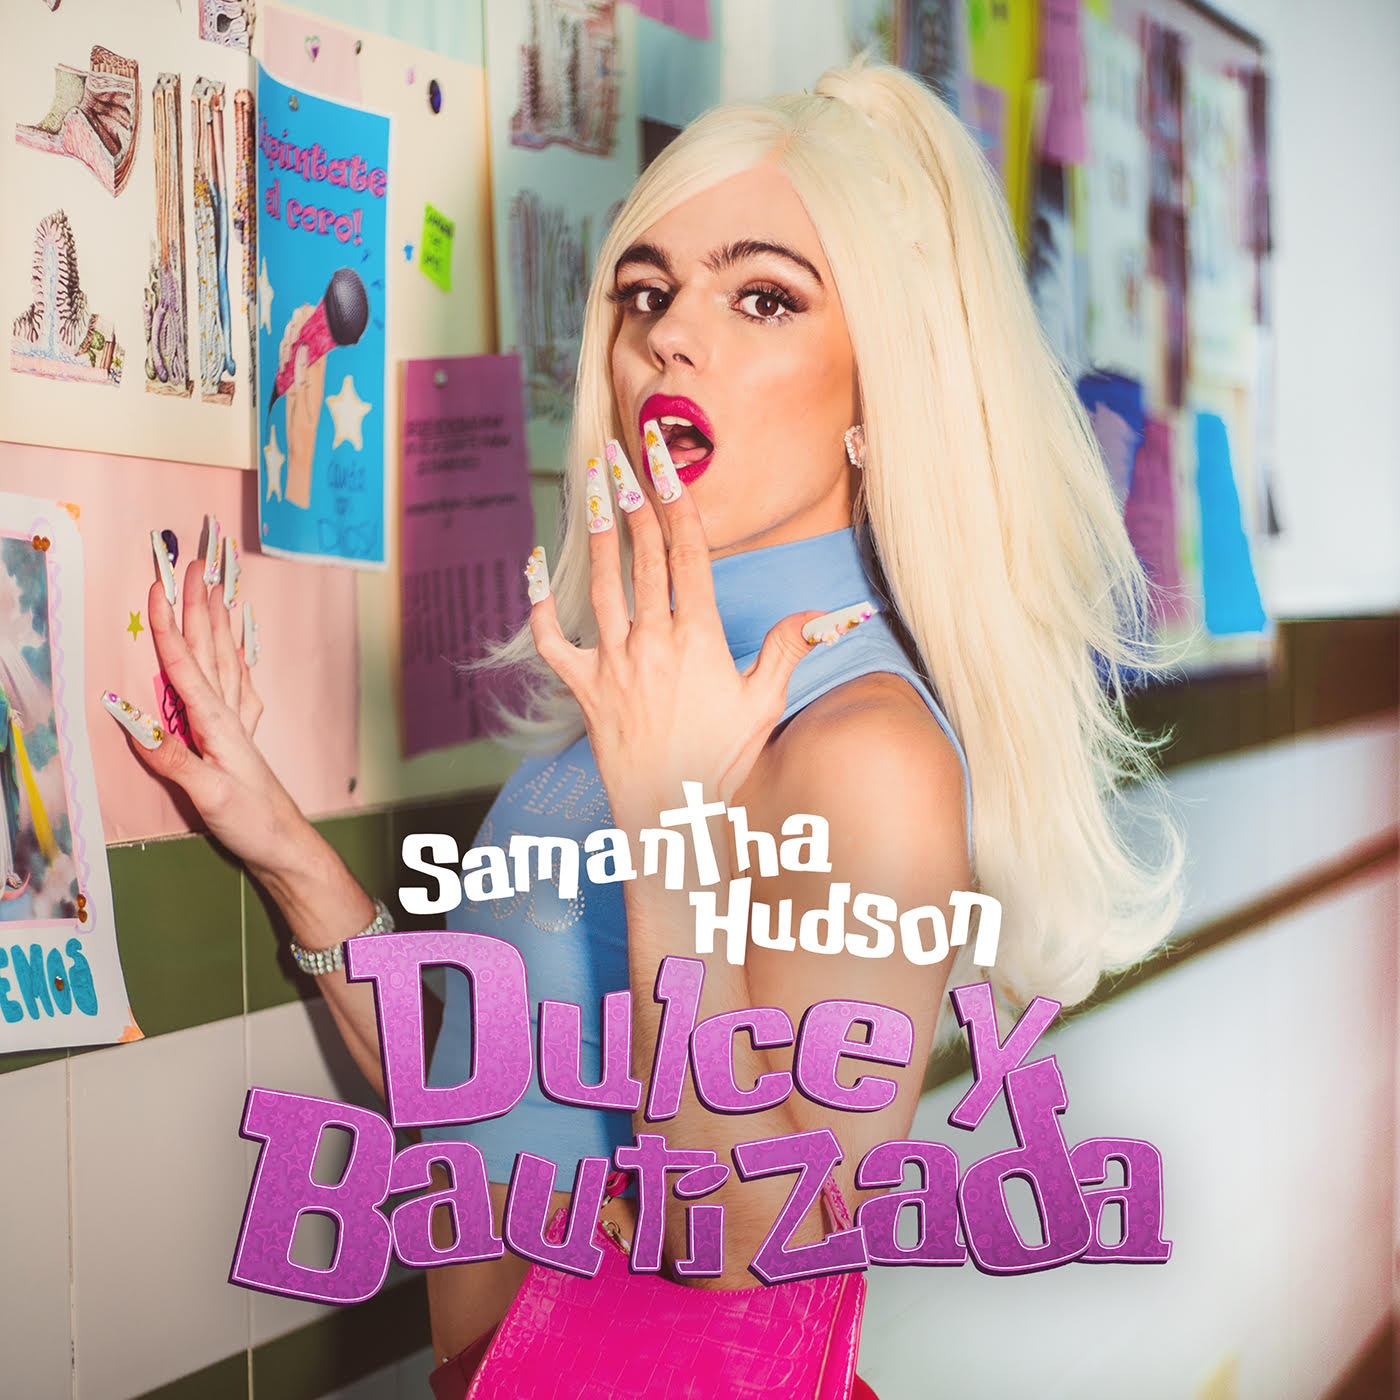 Samantha Hudson "Dulce y Bautizada"